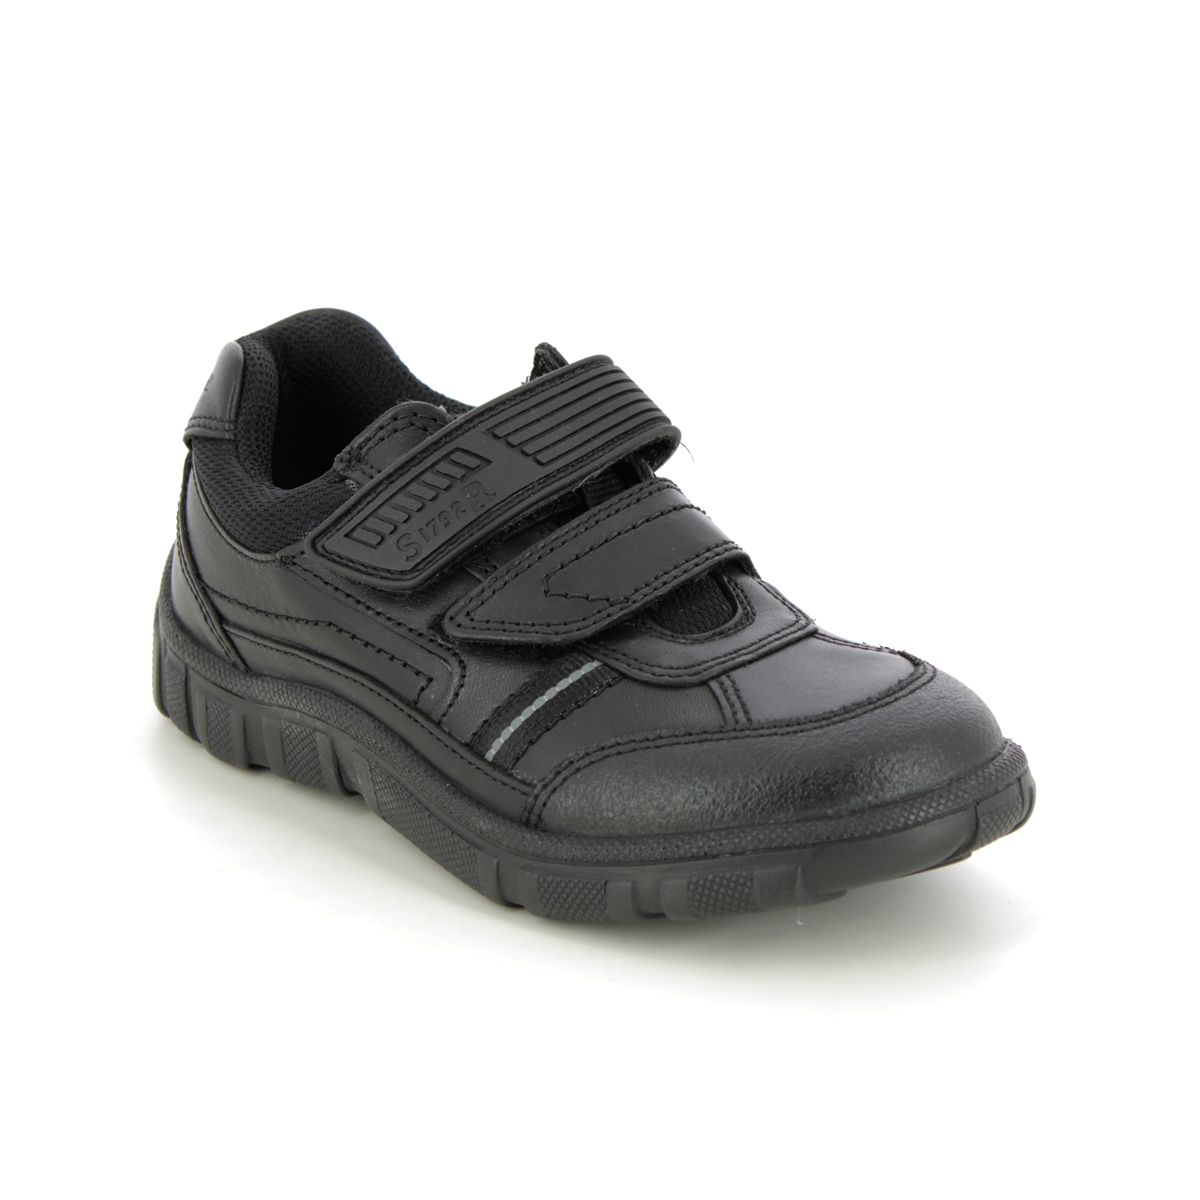 Start Rite - Luke 2V In Black Leather 2273-76F In Size 3.5 In Plain Black Leather For School Boys Shoes  In Black Leather For kids